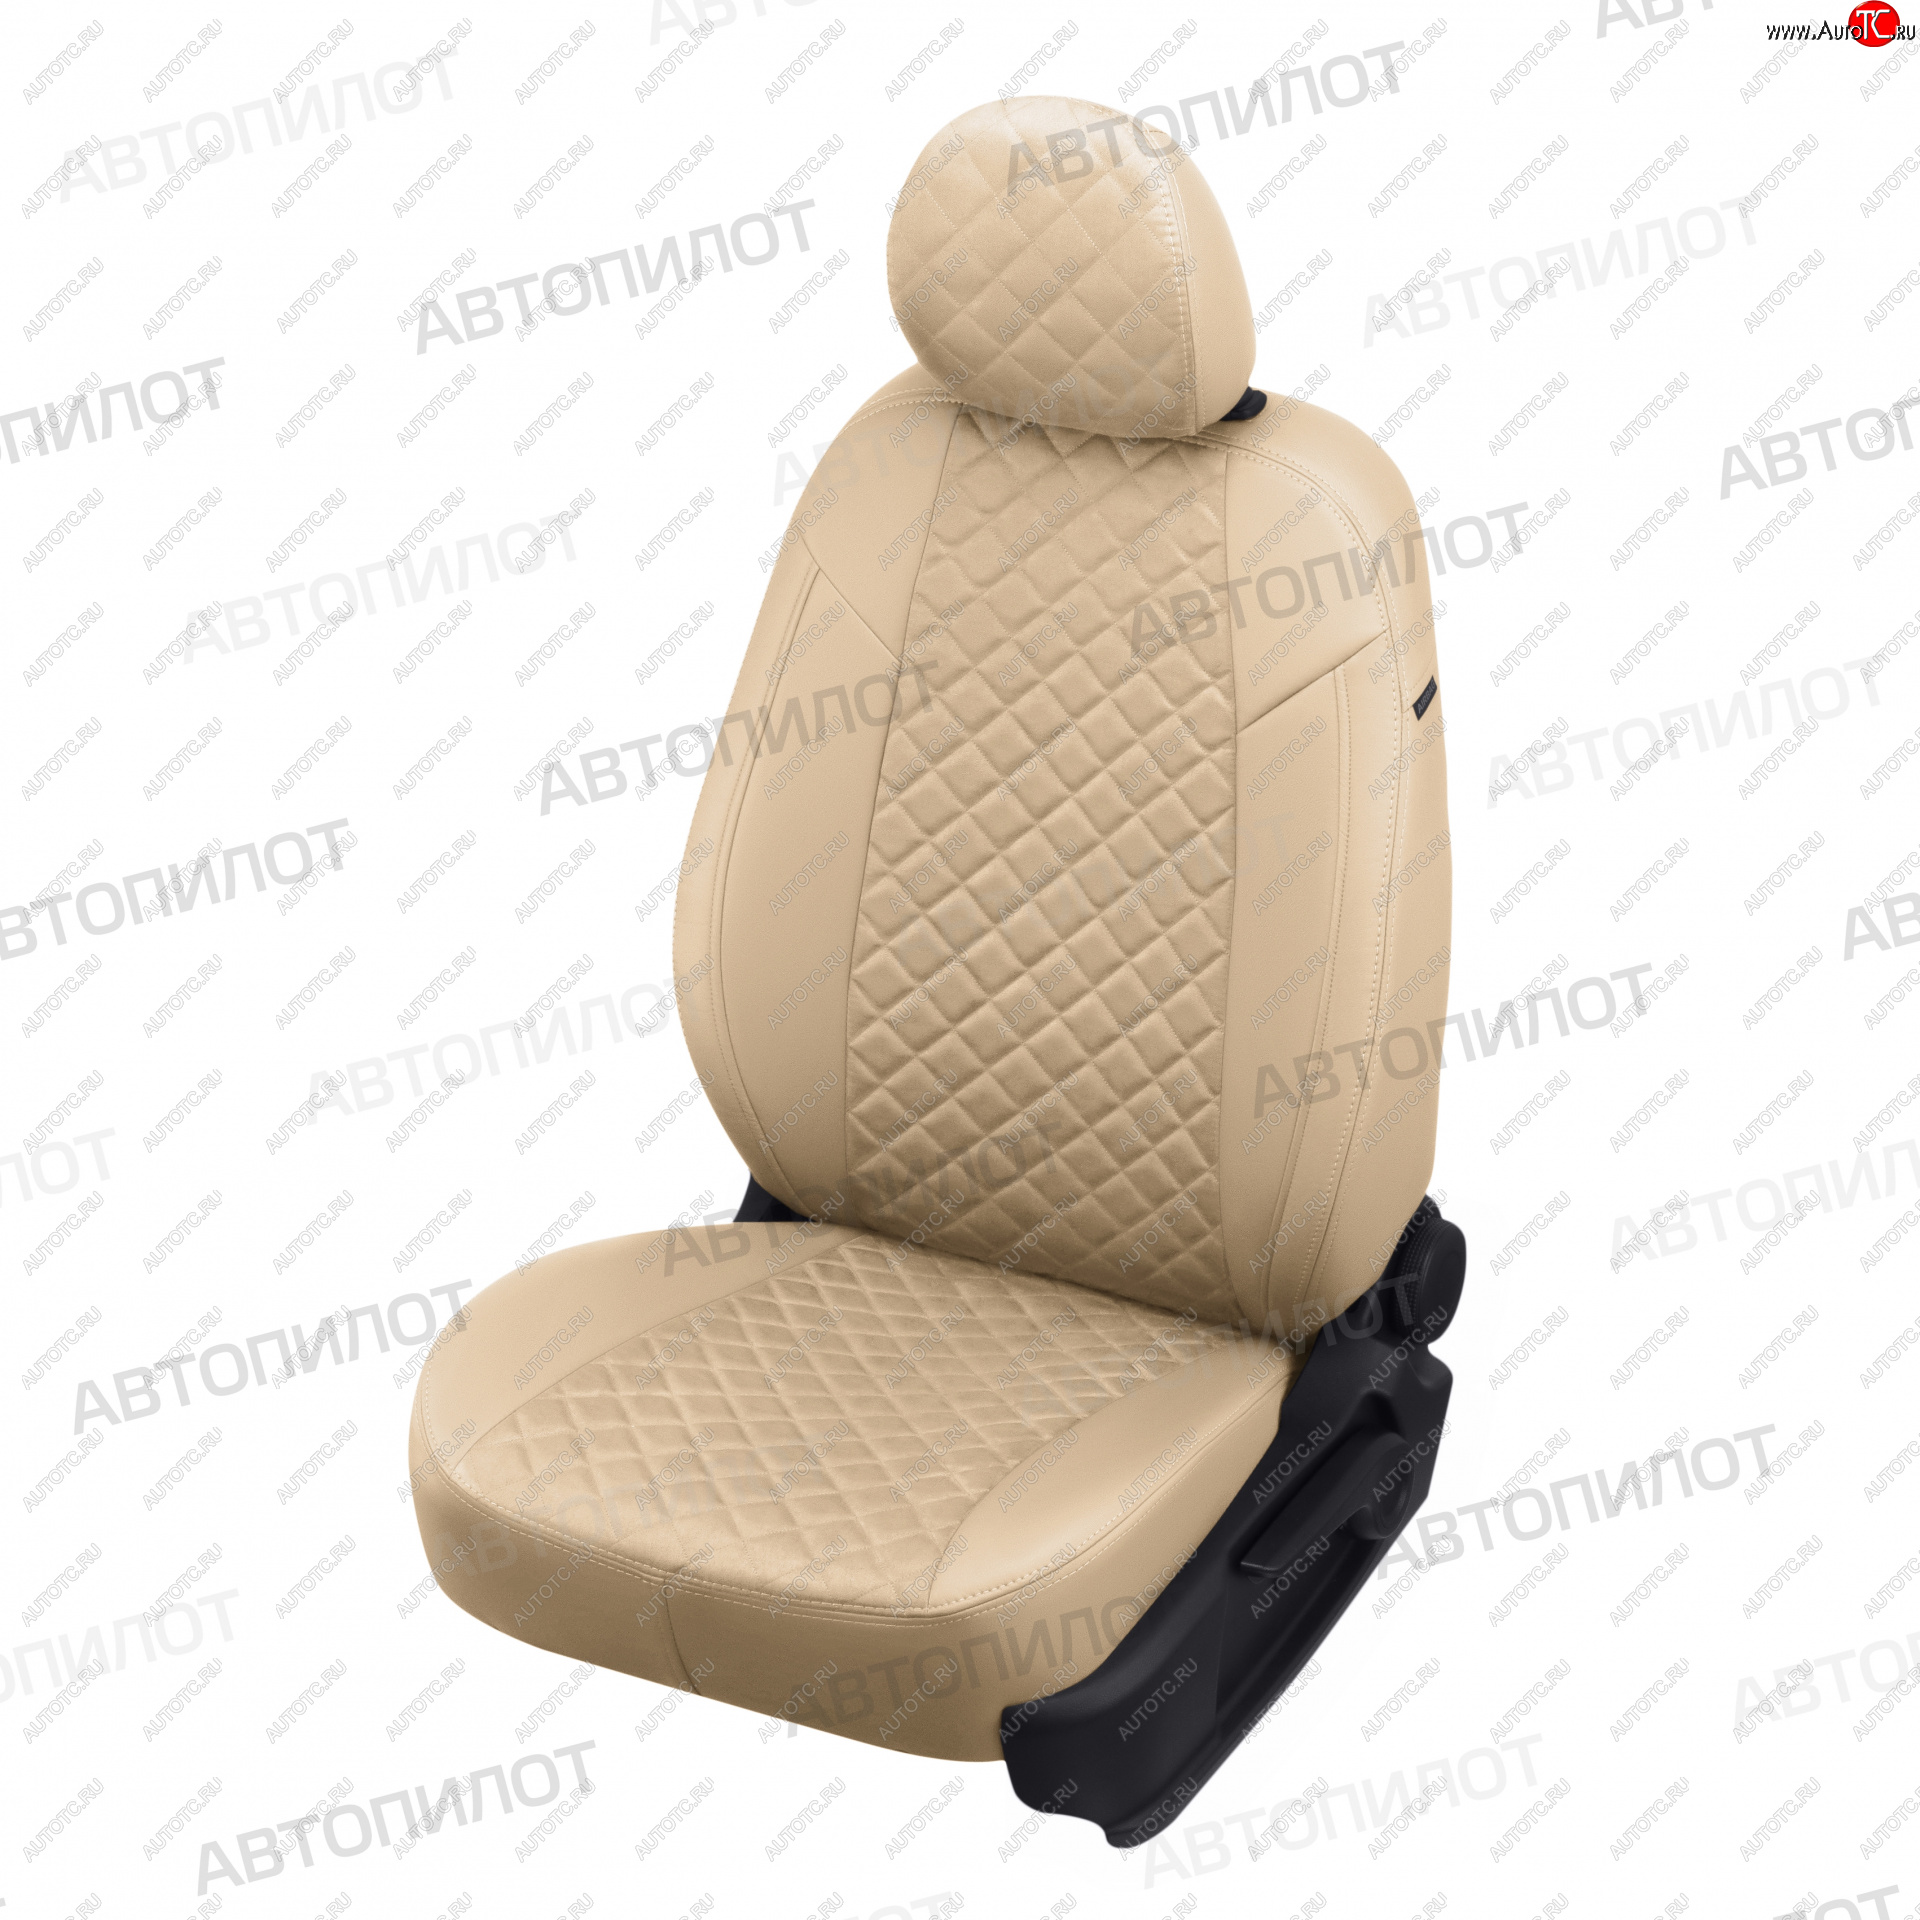 13 999 р. Чехлы сидений (экокожа/алькантара) Автопилот Ромб  Hyundai Elantra ( XD,  XD2) (2000-2010) (бежевый)